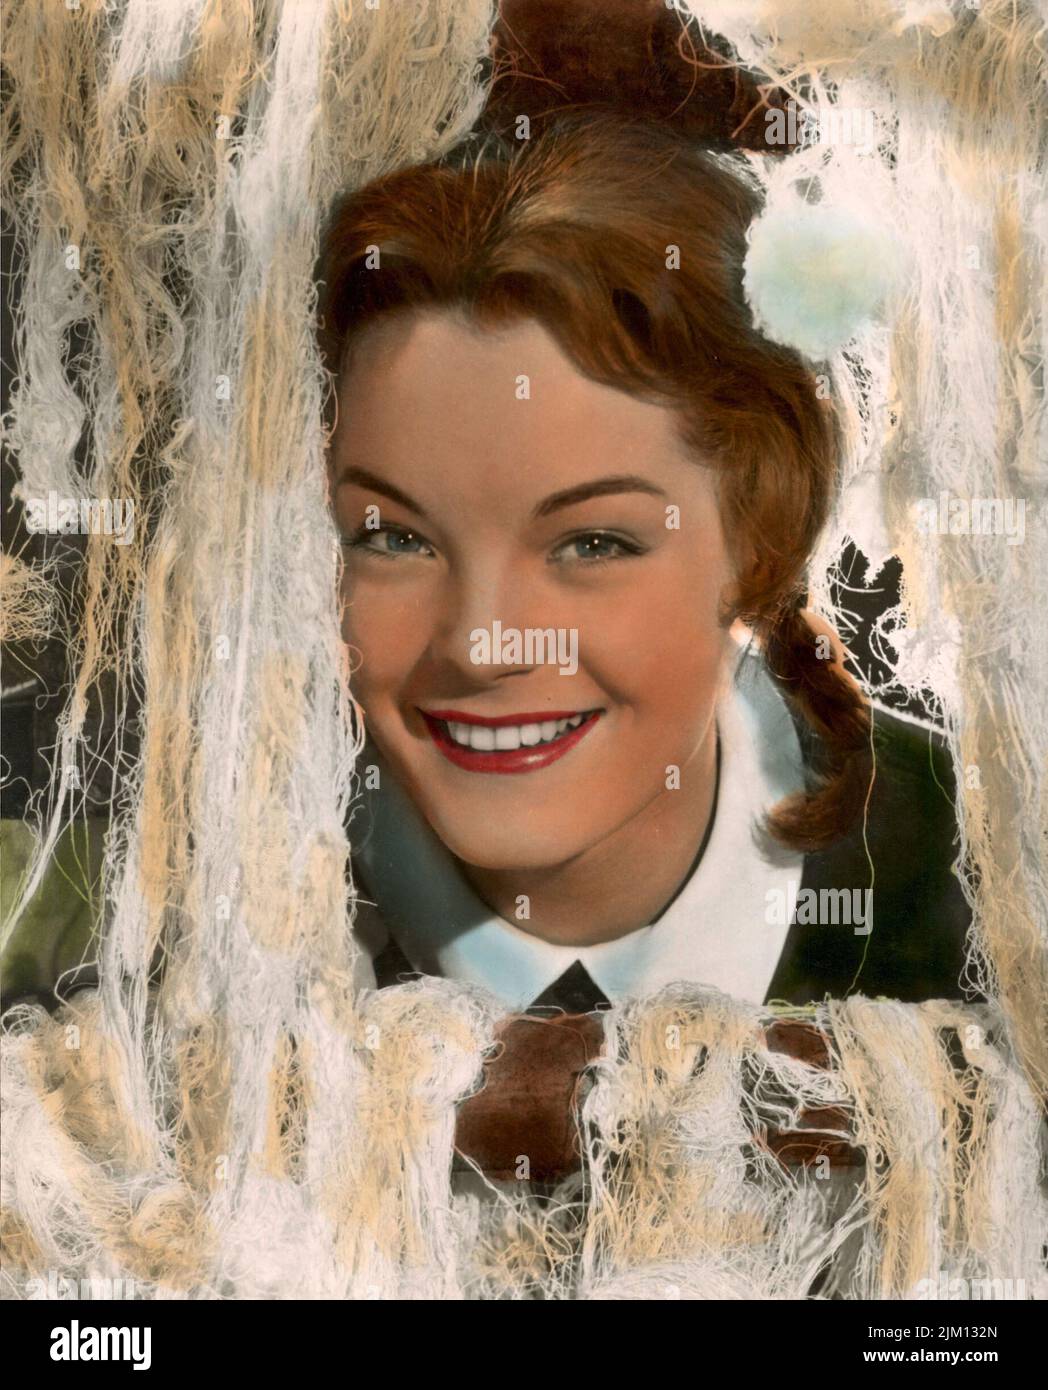 ROMY SCHNEIDER in THE GIRL AND THE LEGEND (1957) -Original title: ROBINSON SOLL NICHT STERBEN-, directed by JOSEF VON BAKY. Credit: WDR / Album Stock Photo